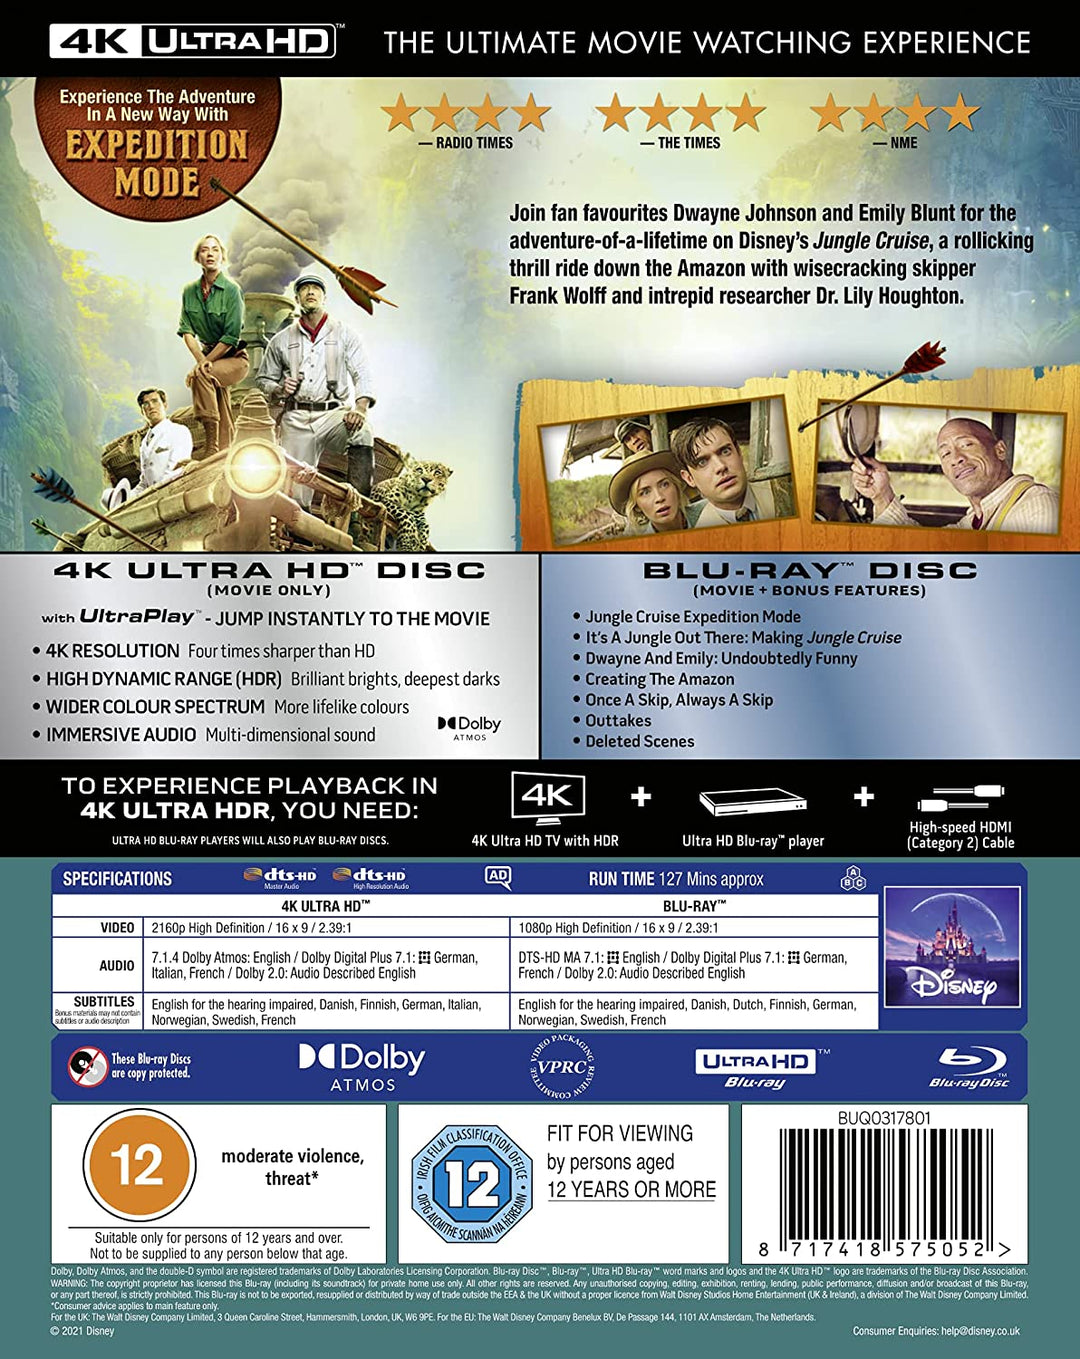 Jungle Cruise UHD - Adventure/Action [Blu-ray]